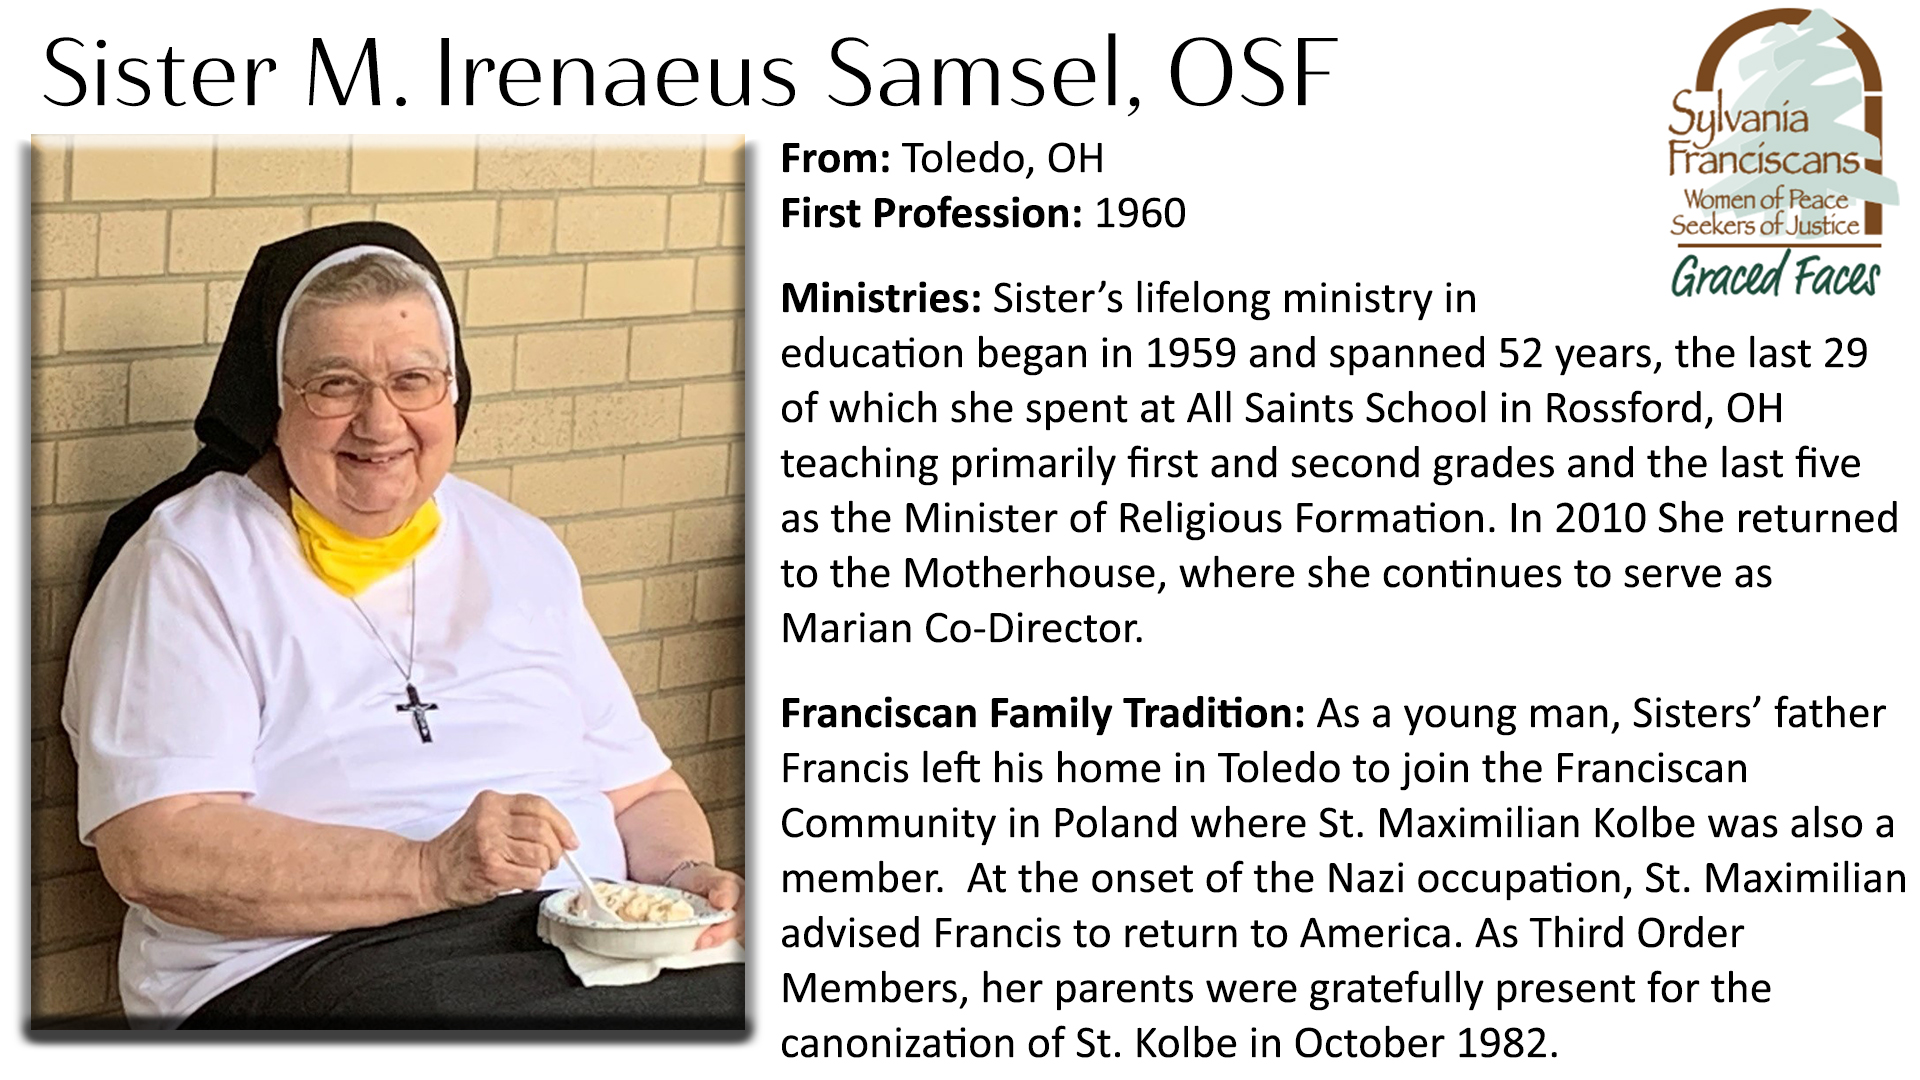 Sister Irenaeus Samsel, OSF